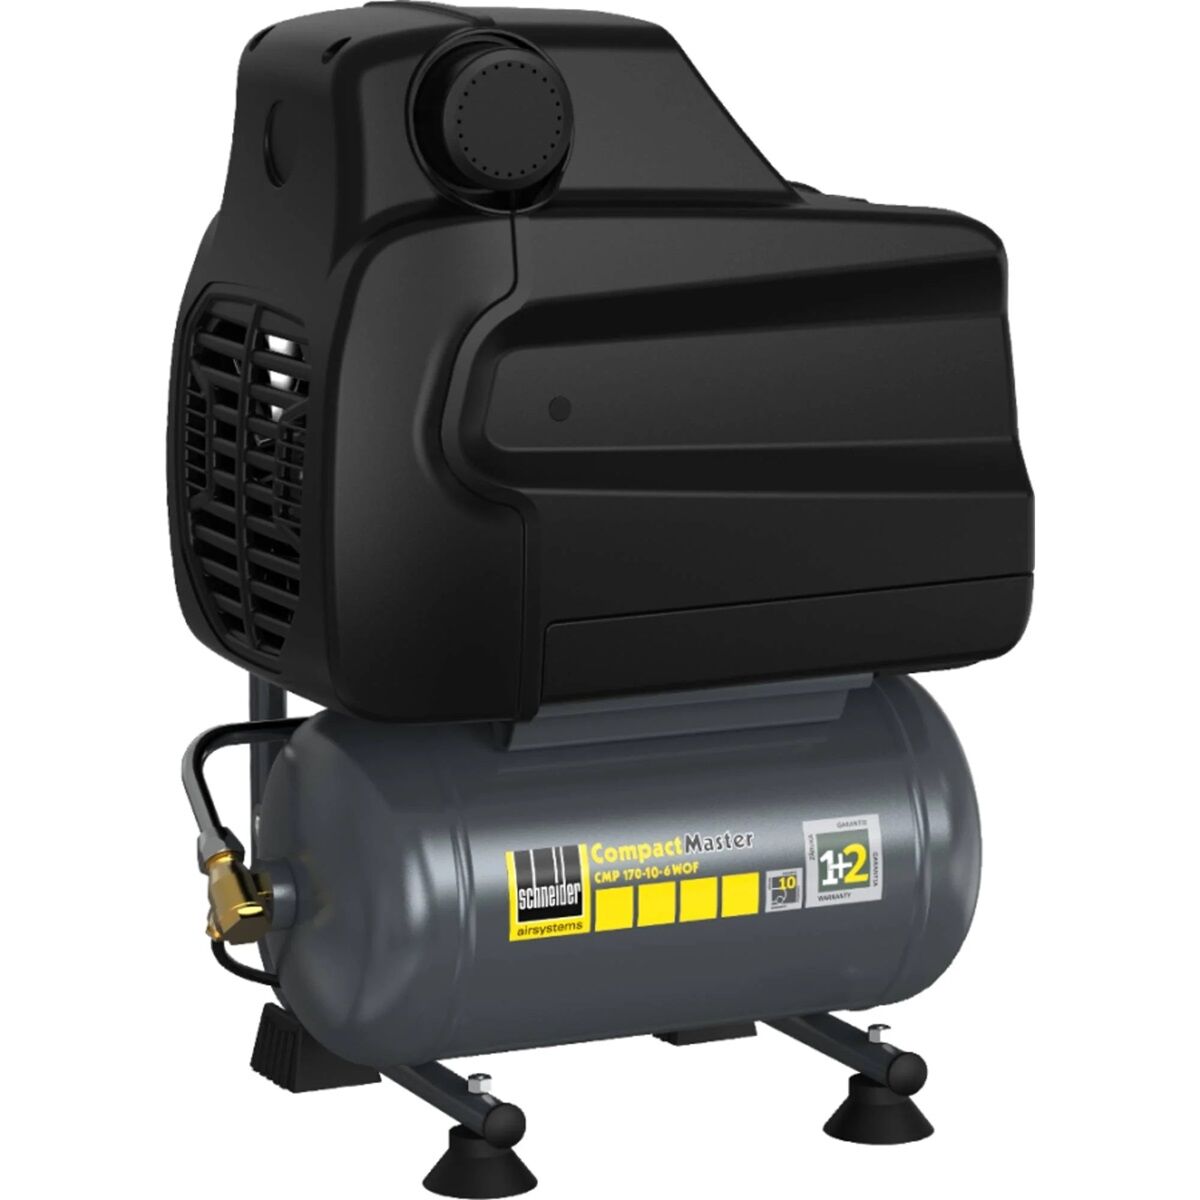 Compressore Schneider CPM 170-10-6 WOF 1129741036 | Edizione limitata